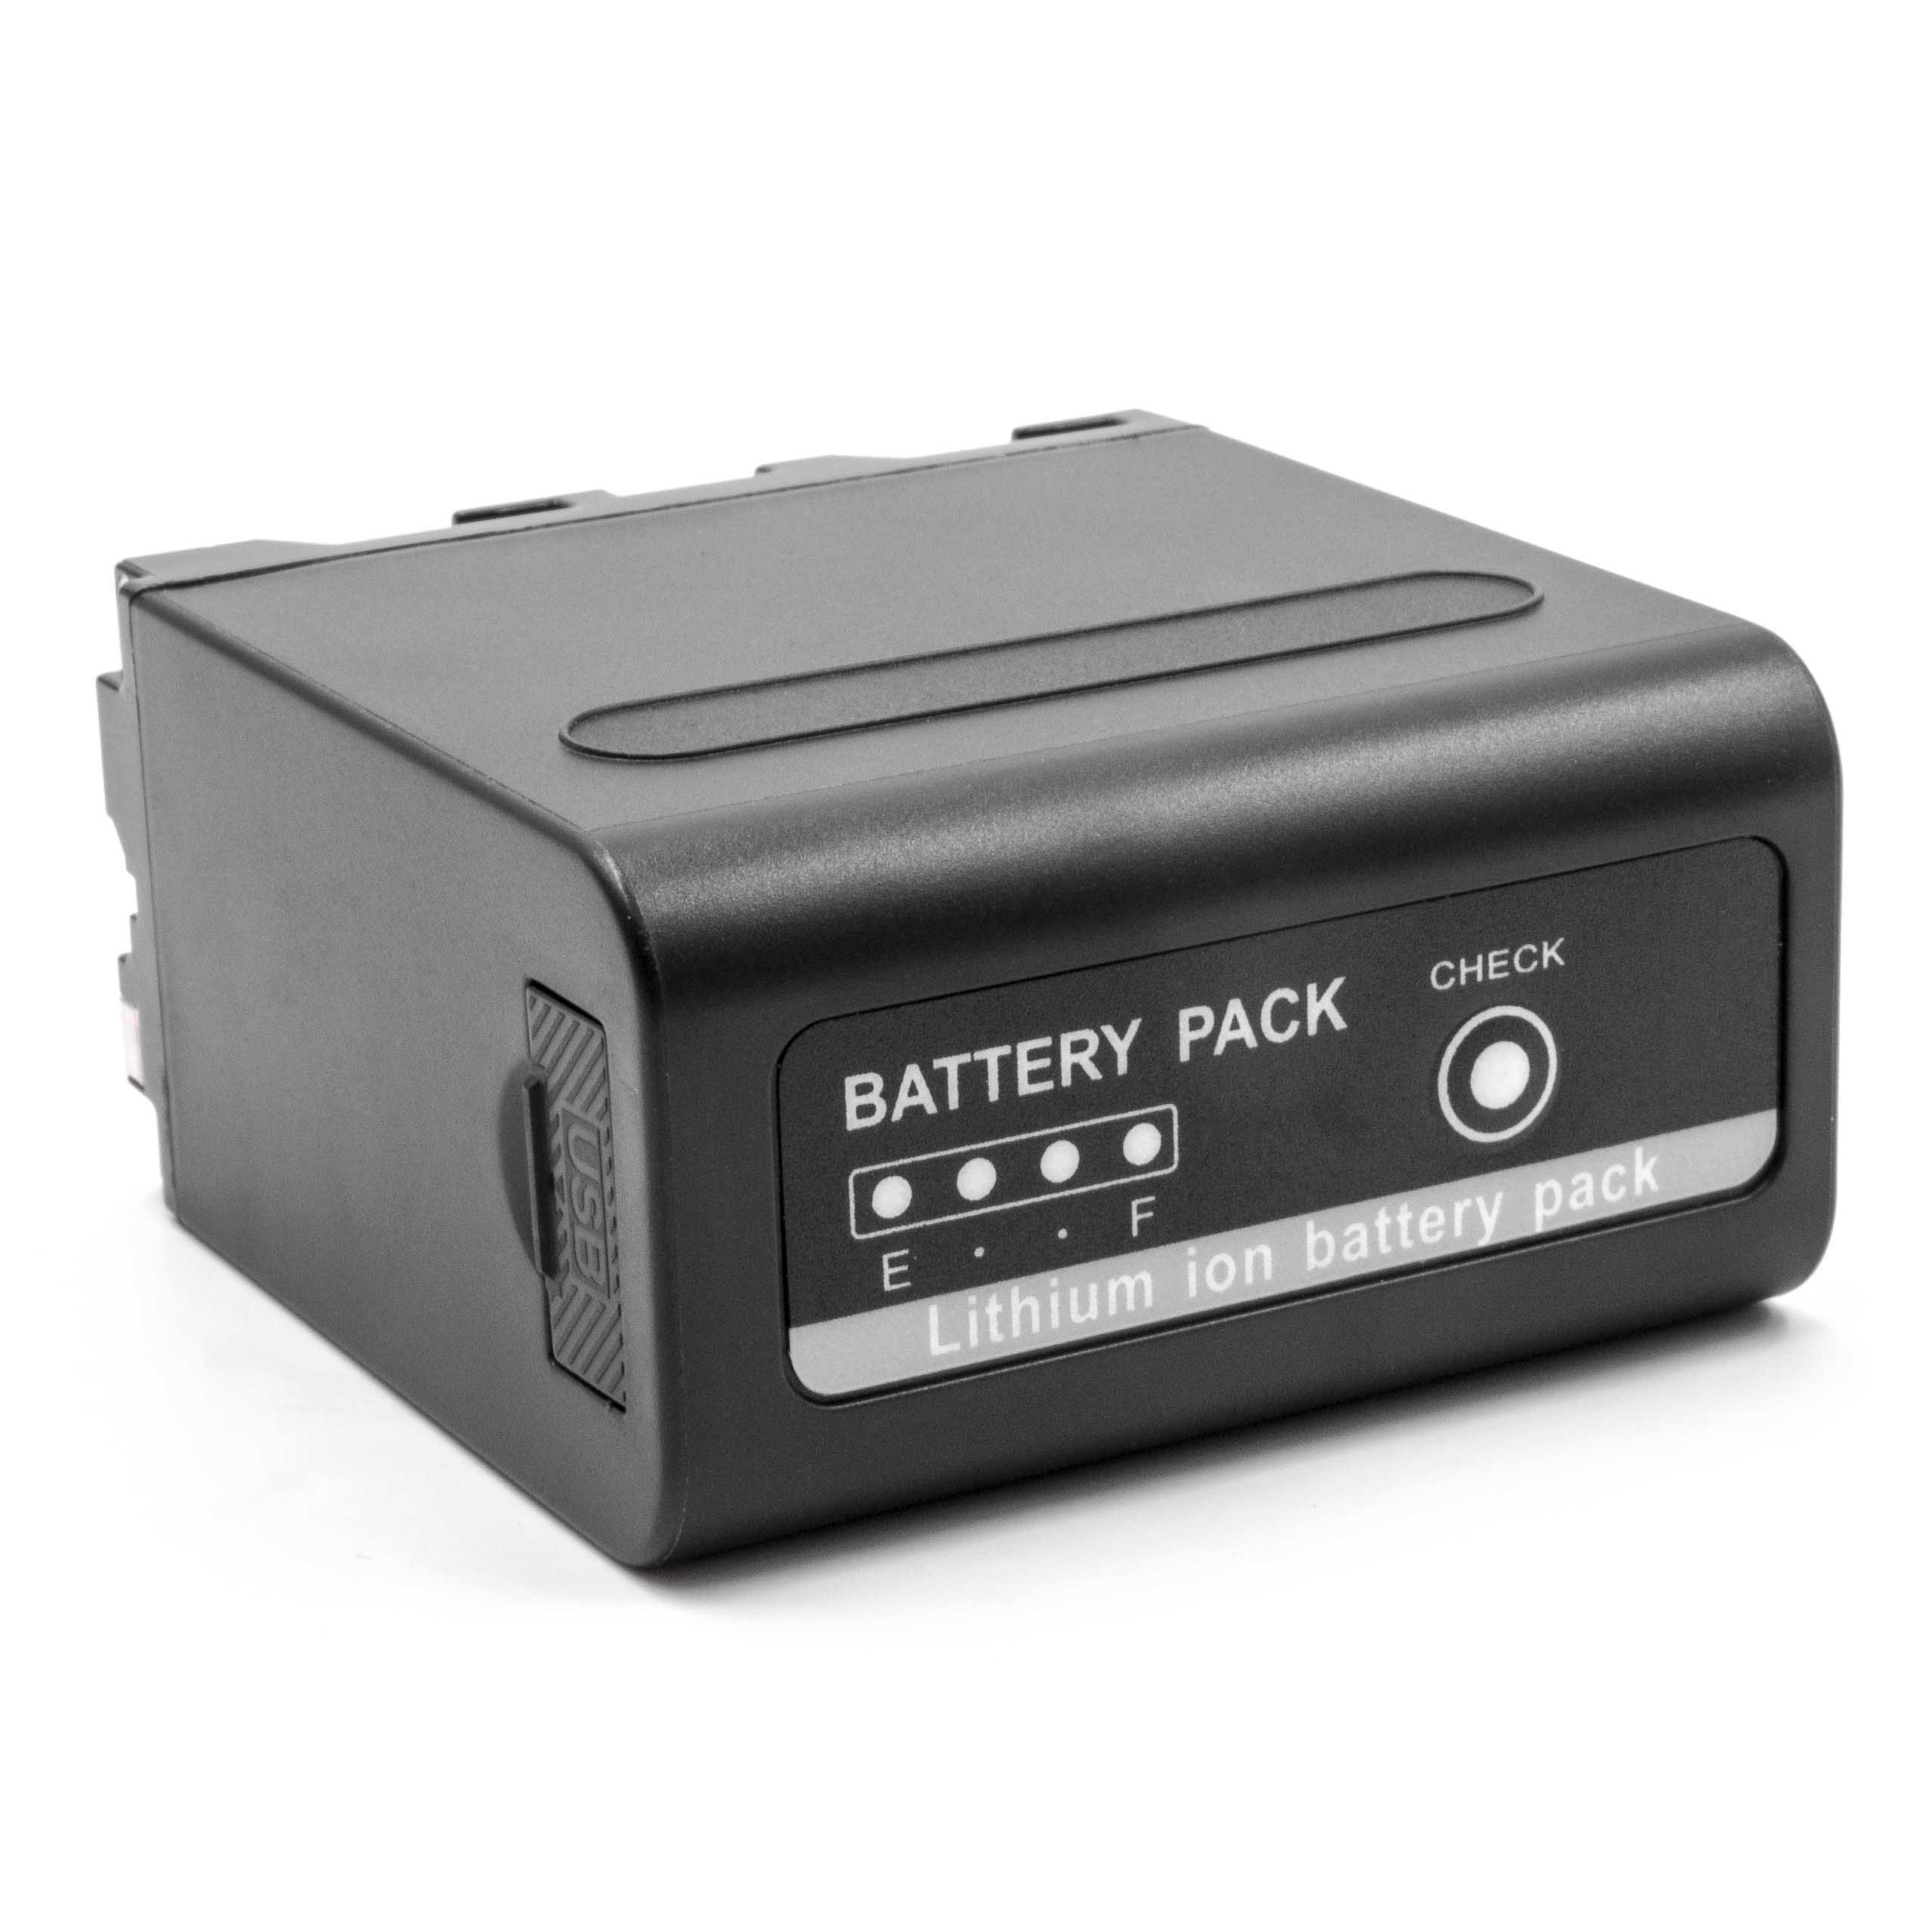 Videocamera Battery Replacement for Sony NP-F930, NP-F950, NP-F950/B, NP-F930/B - 10200mAh 7.4V Li-Ion